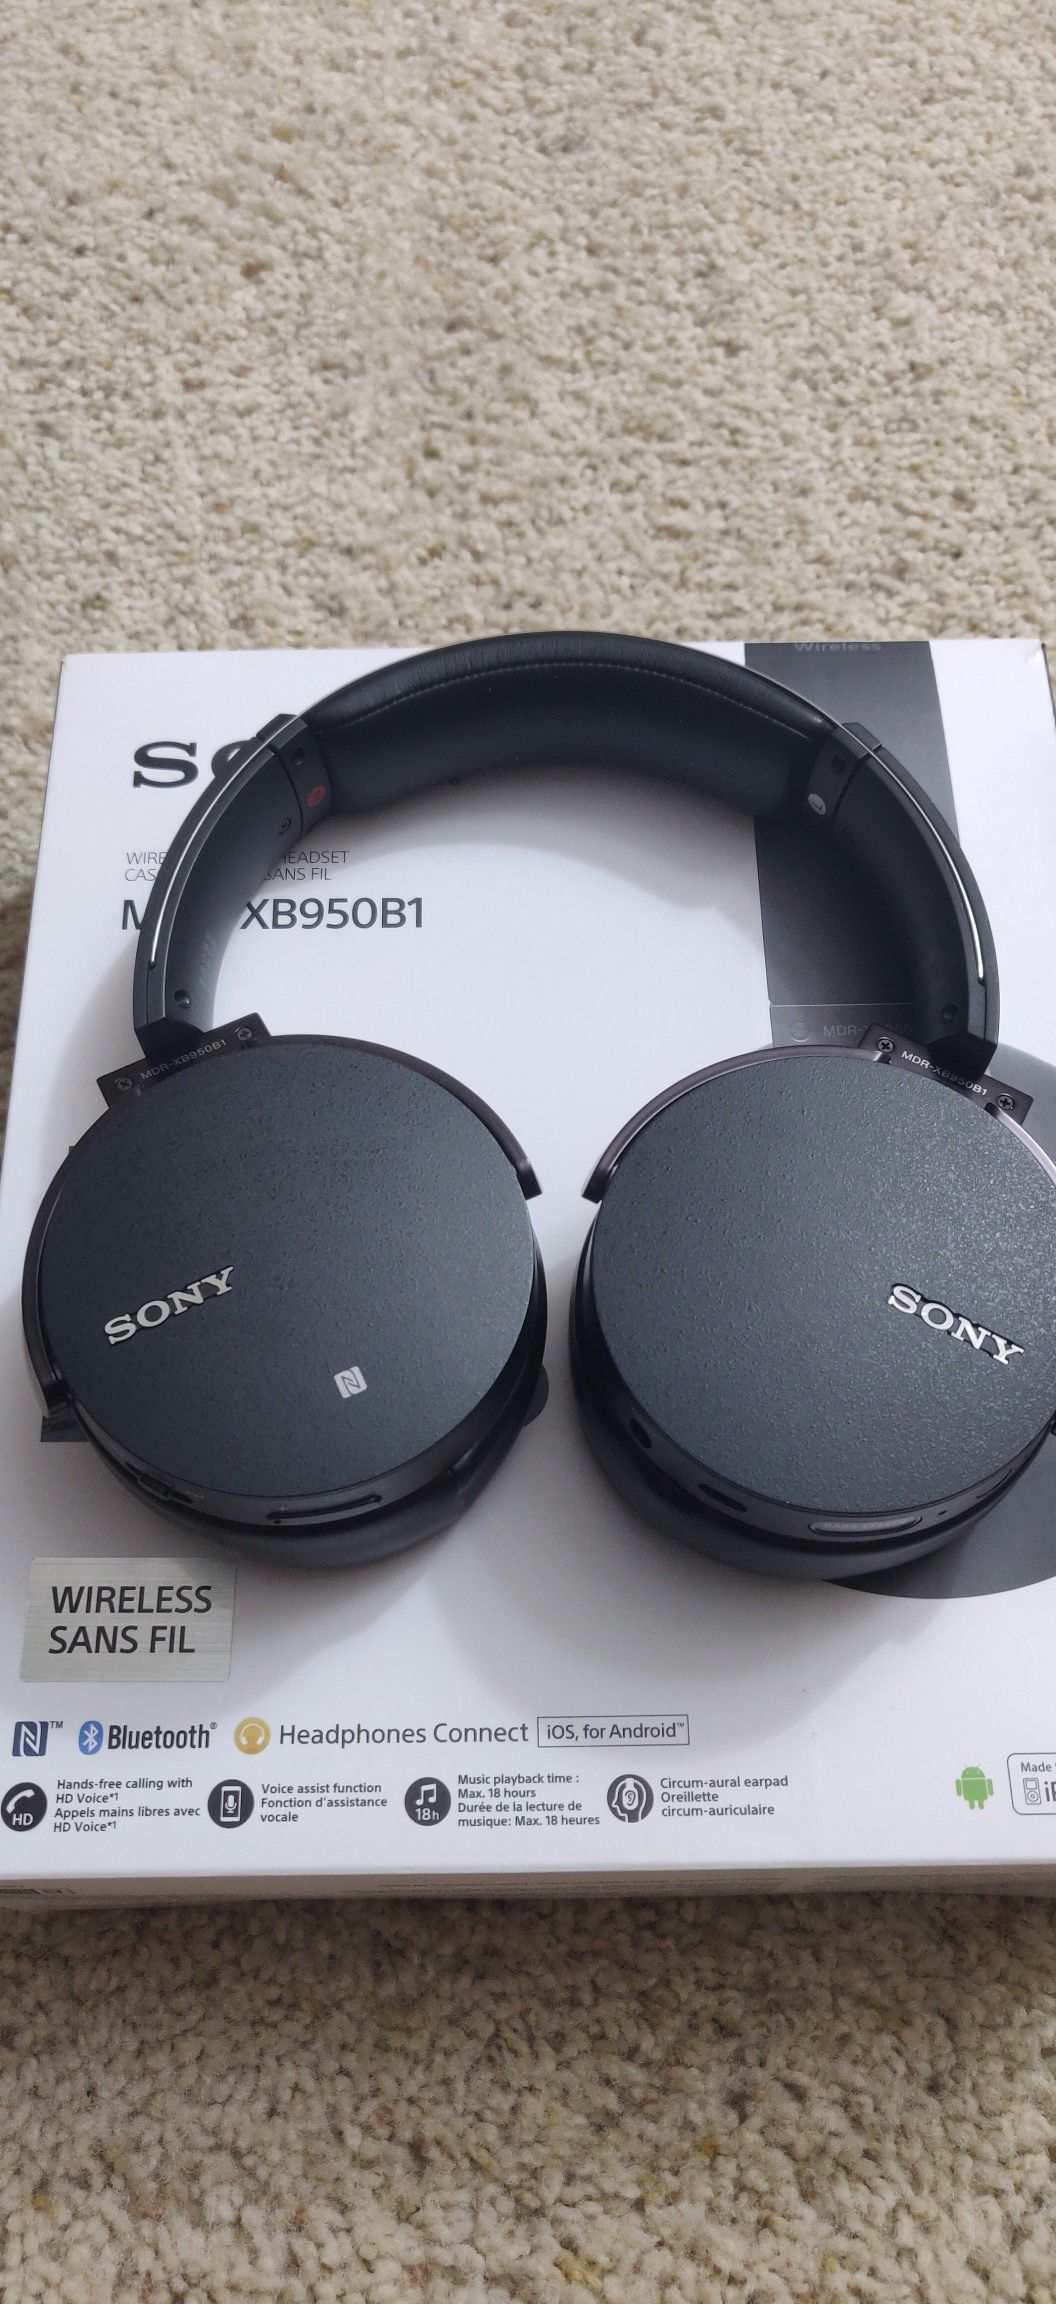 Sony wireless over ear extra bass headphones : MDR-XB950B1